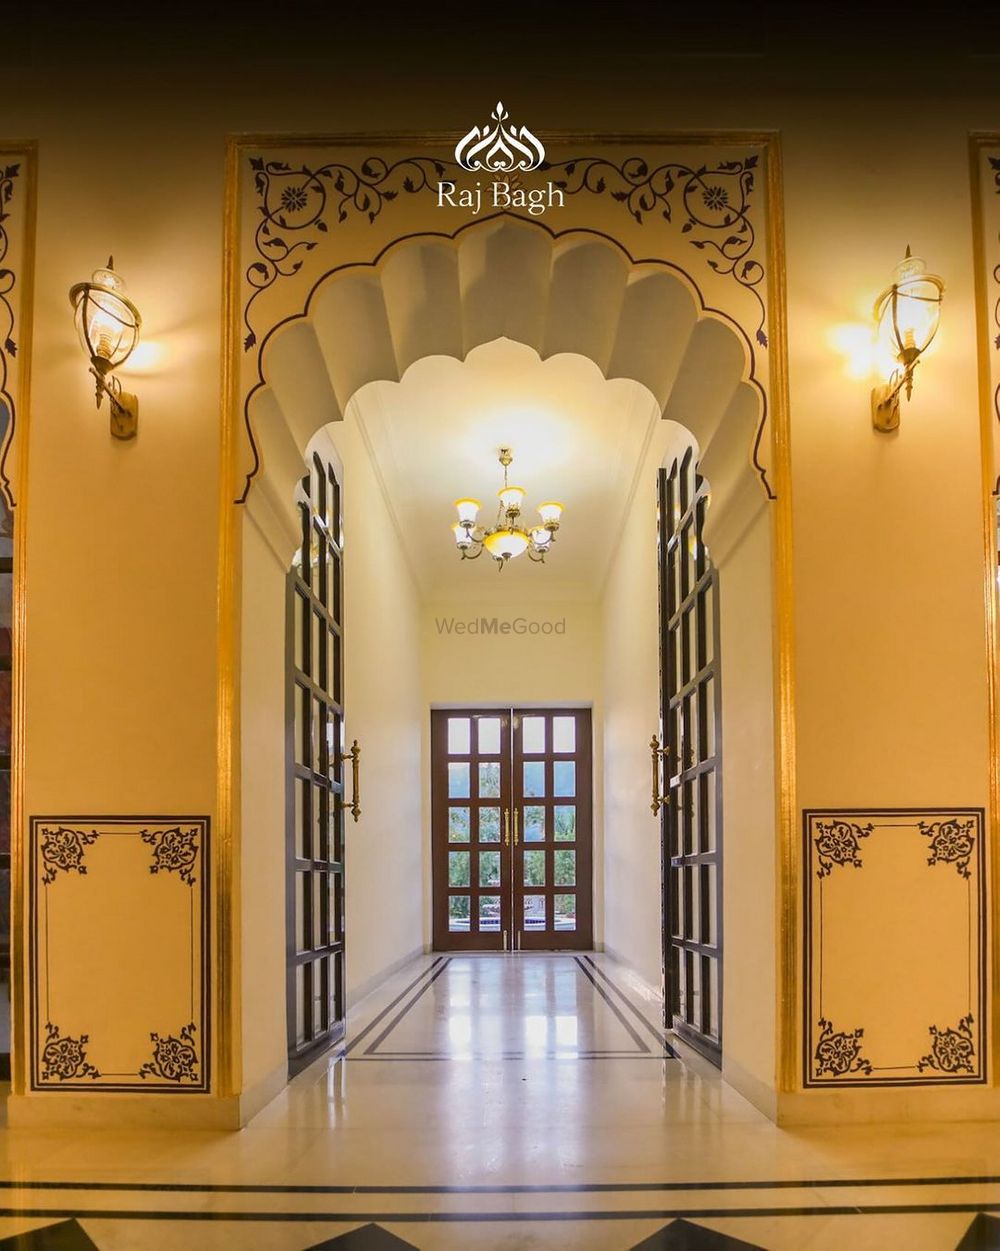 Photo By Hotel Raj Bagh Palace - Venues